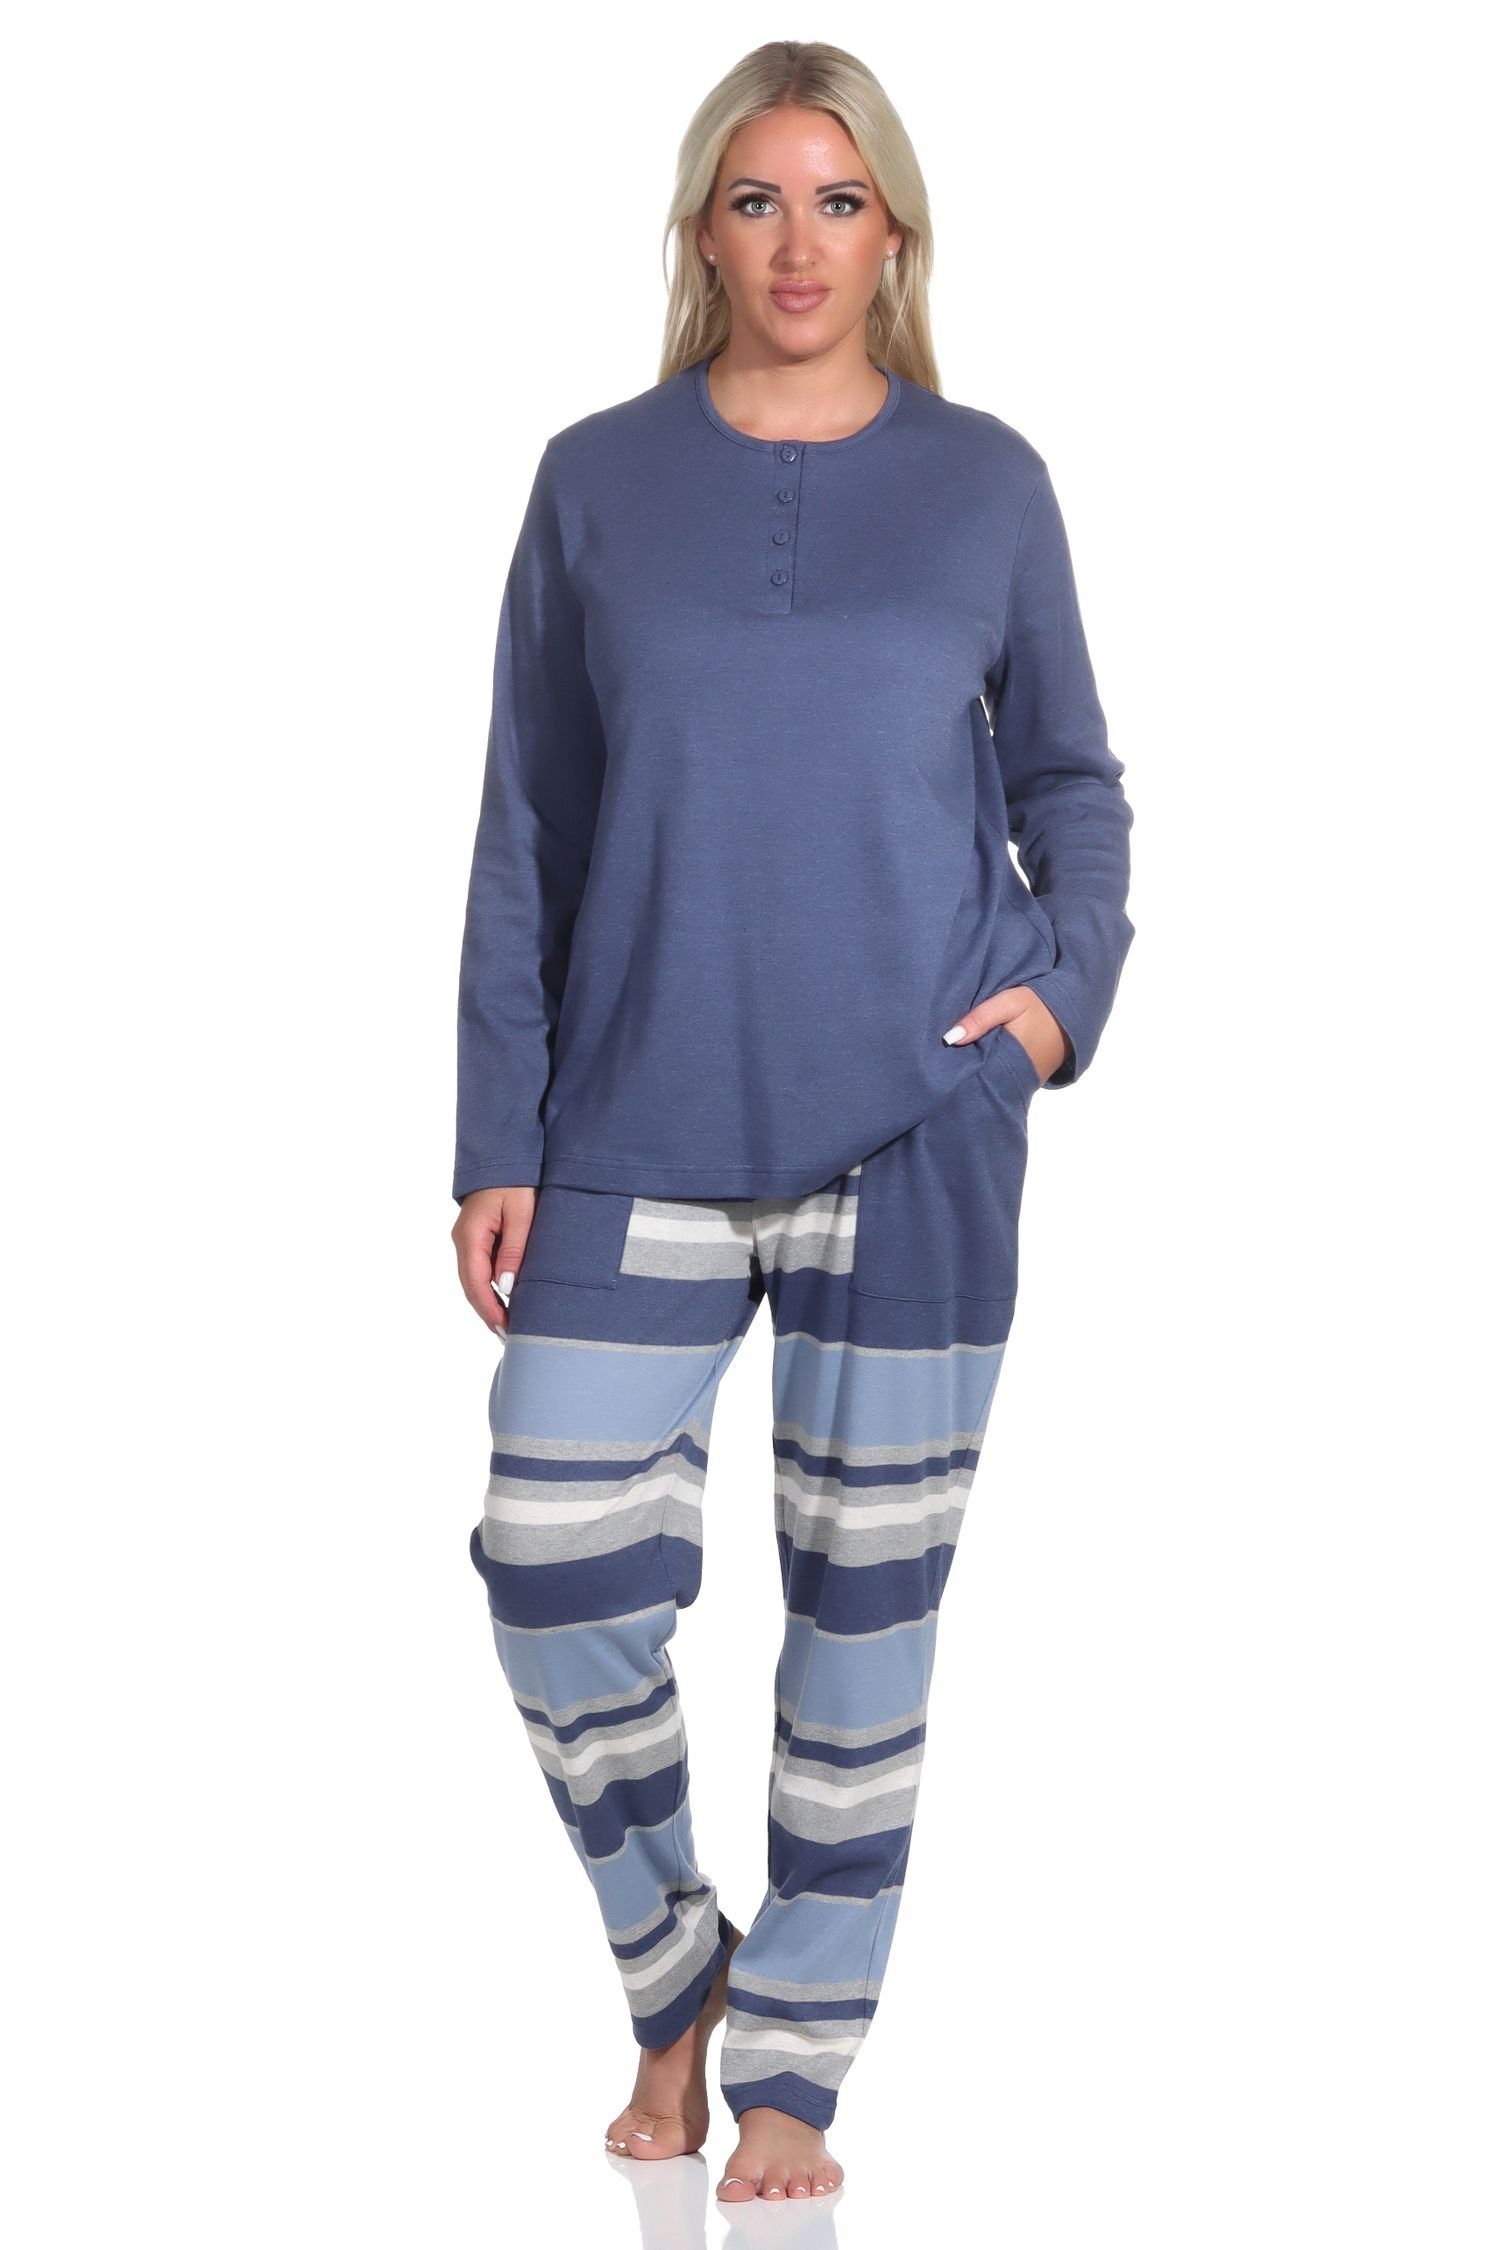 Normann Pyjama Damen Pyjama lang Schlafanzug in kuscheliger Interlock Qualität blau-melange | Pyjamas